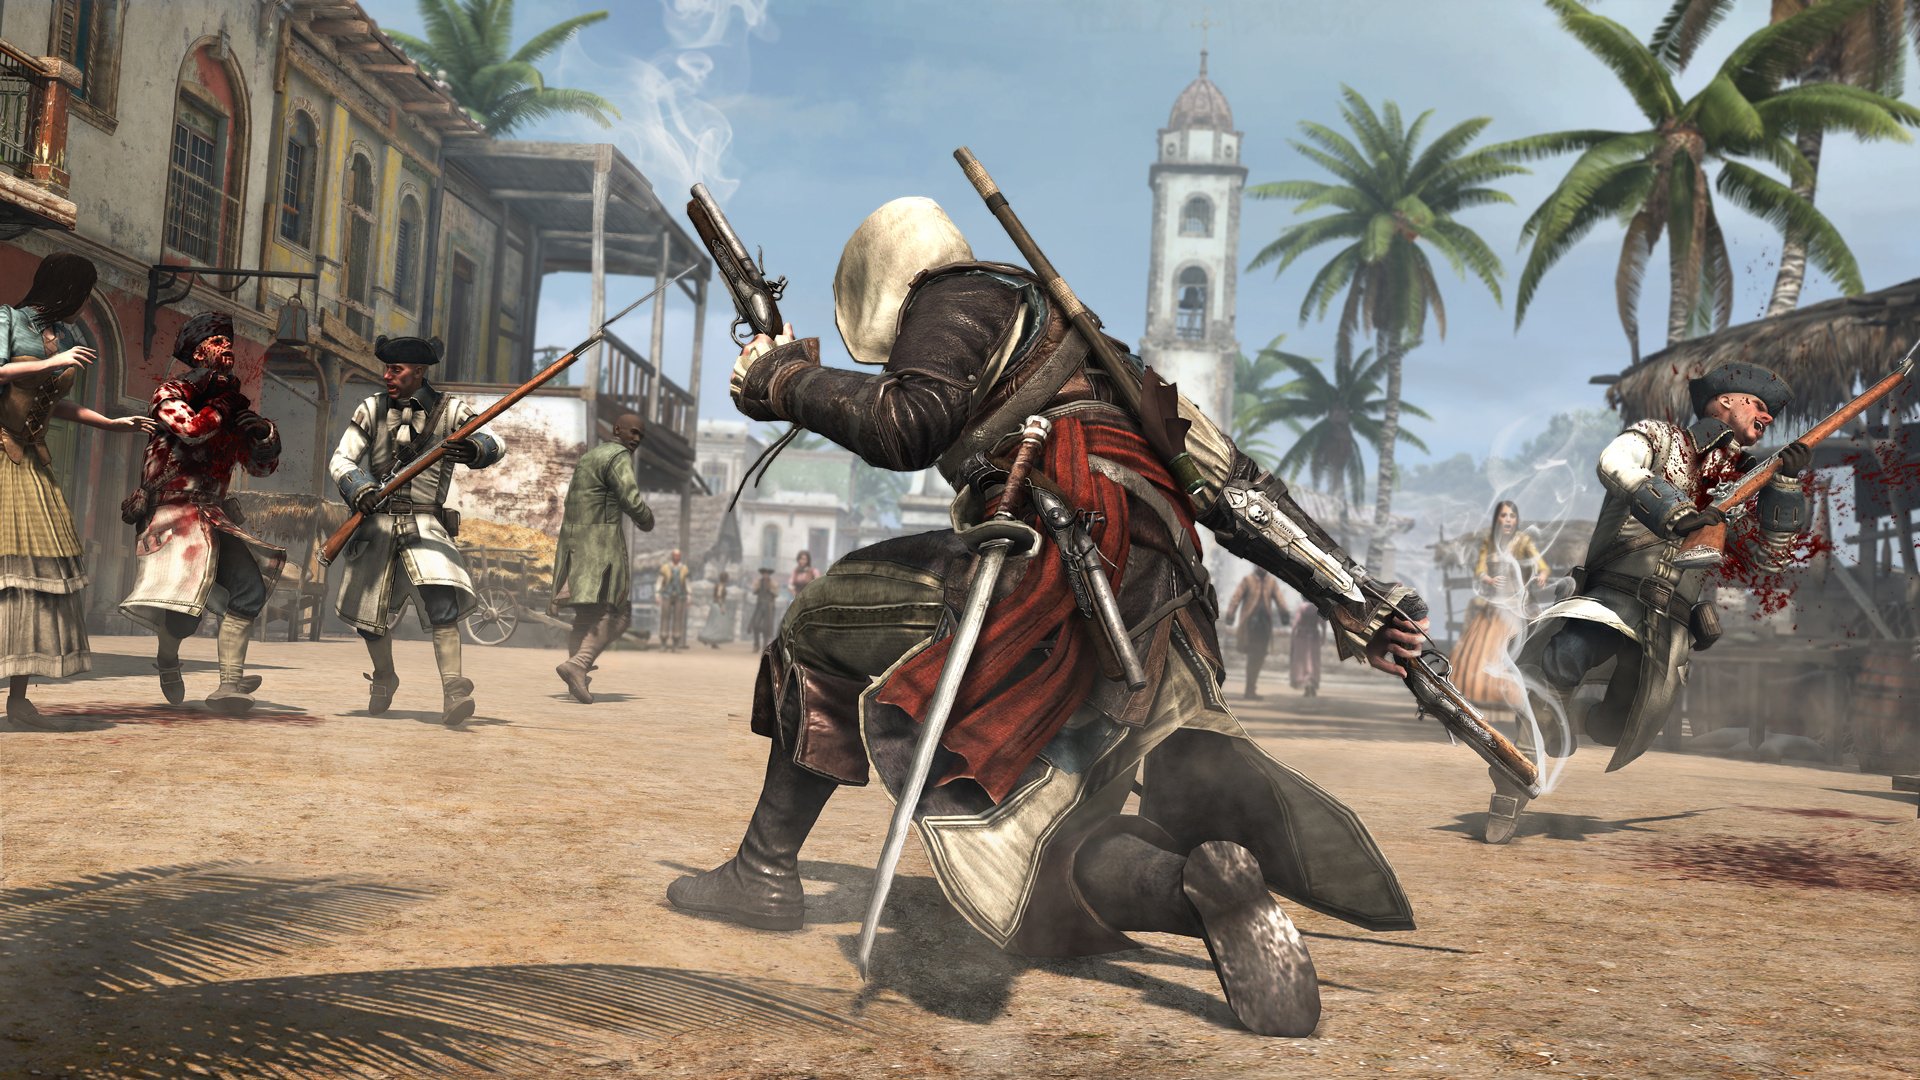 Assassin's Creed Wii U